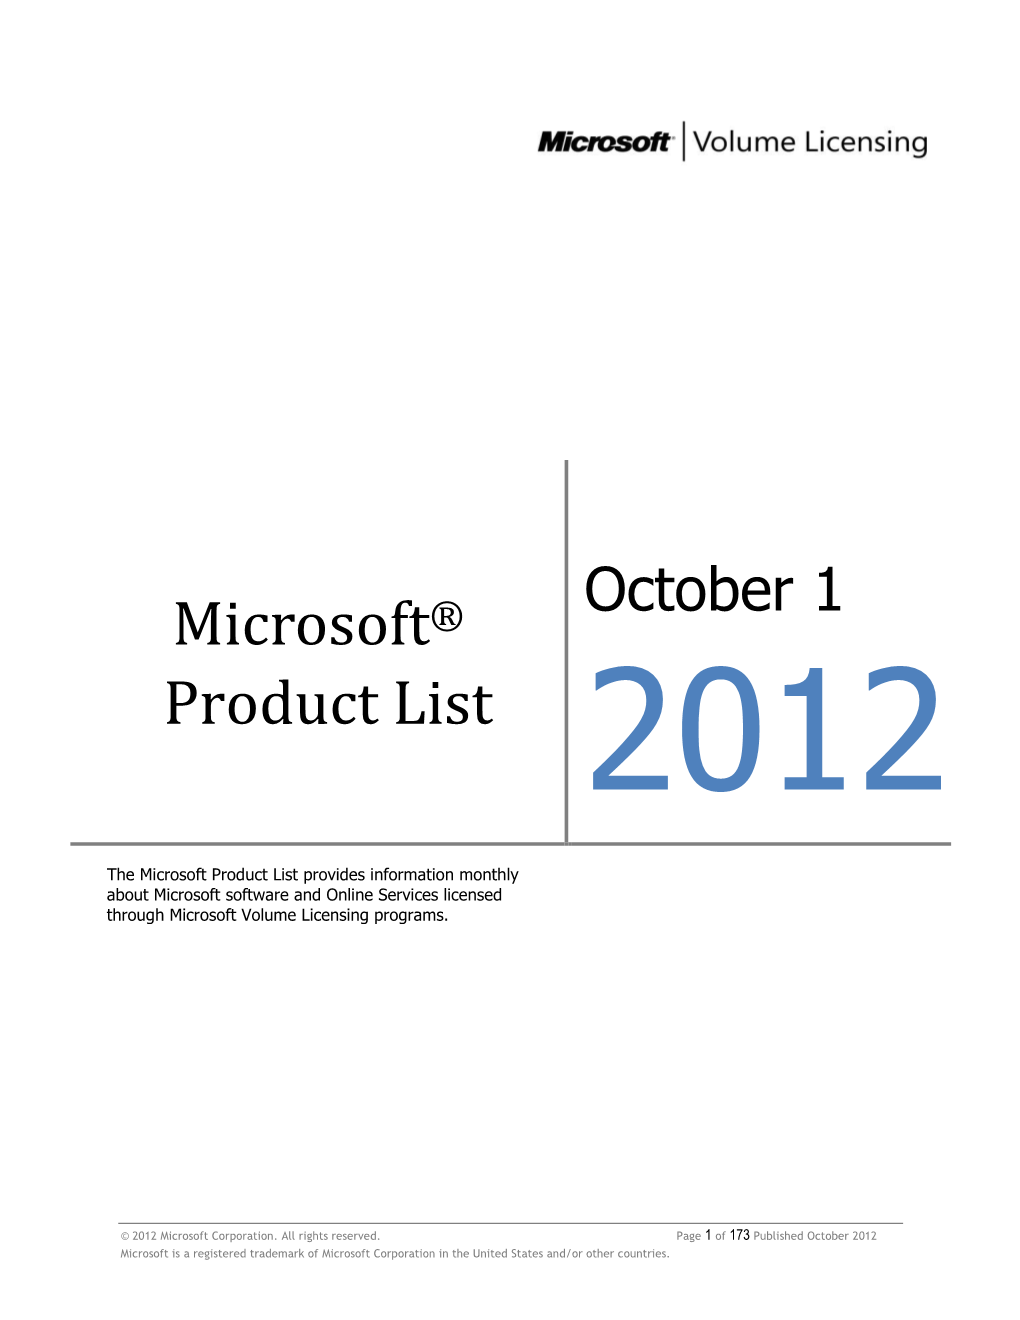 Microsoft® Product List 2012